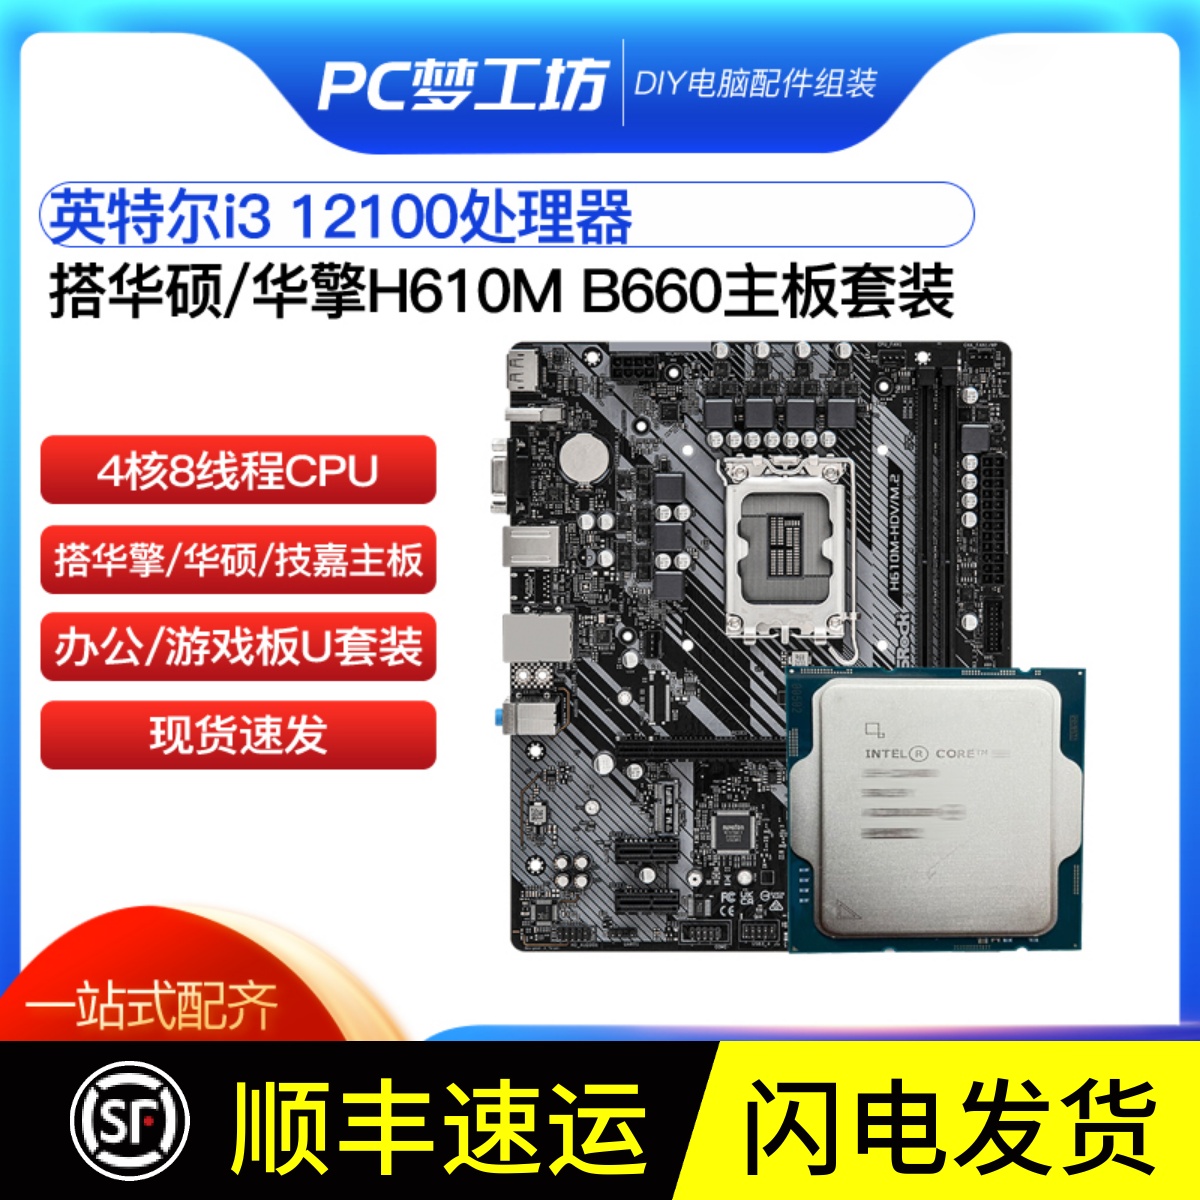 Intel Core i3 12100 チップ CPU オプション ASUS ASRock H610M B660 マザーボード CPU パッケージ